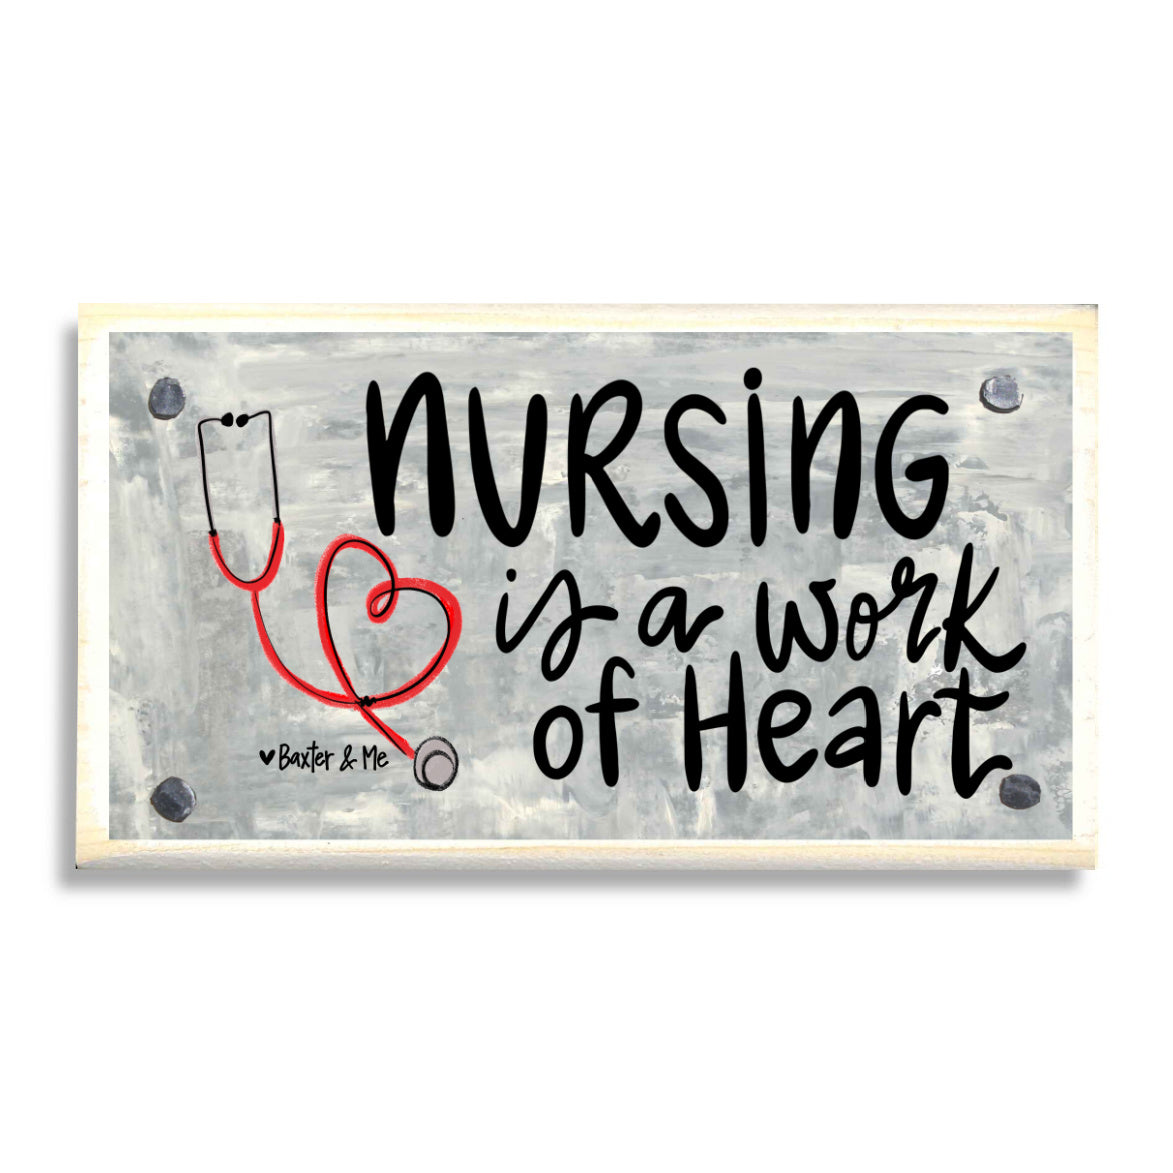 Nurse Work of Heart Happy Block